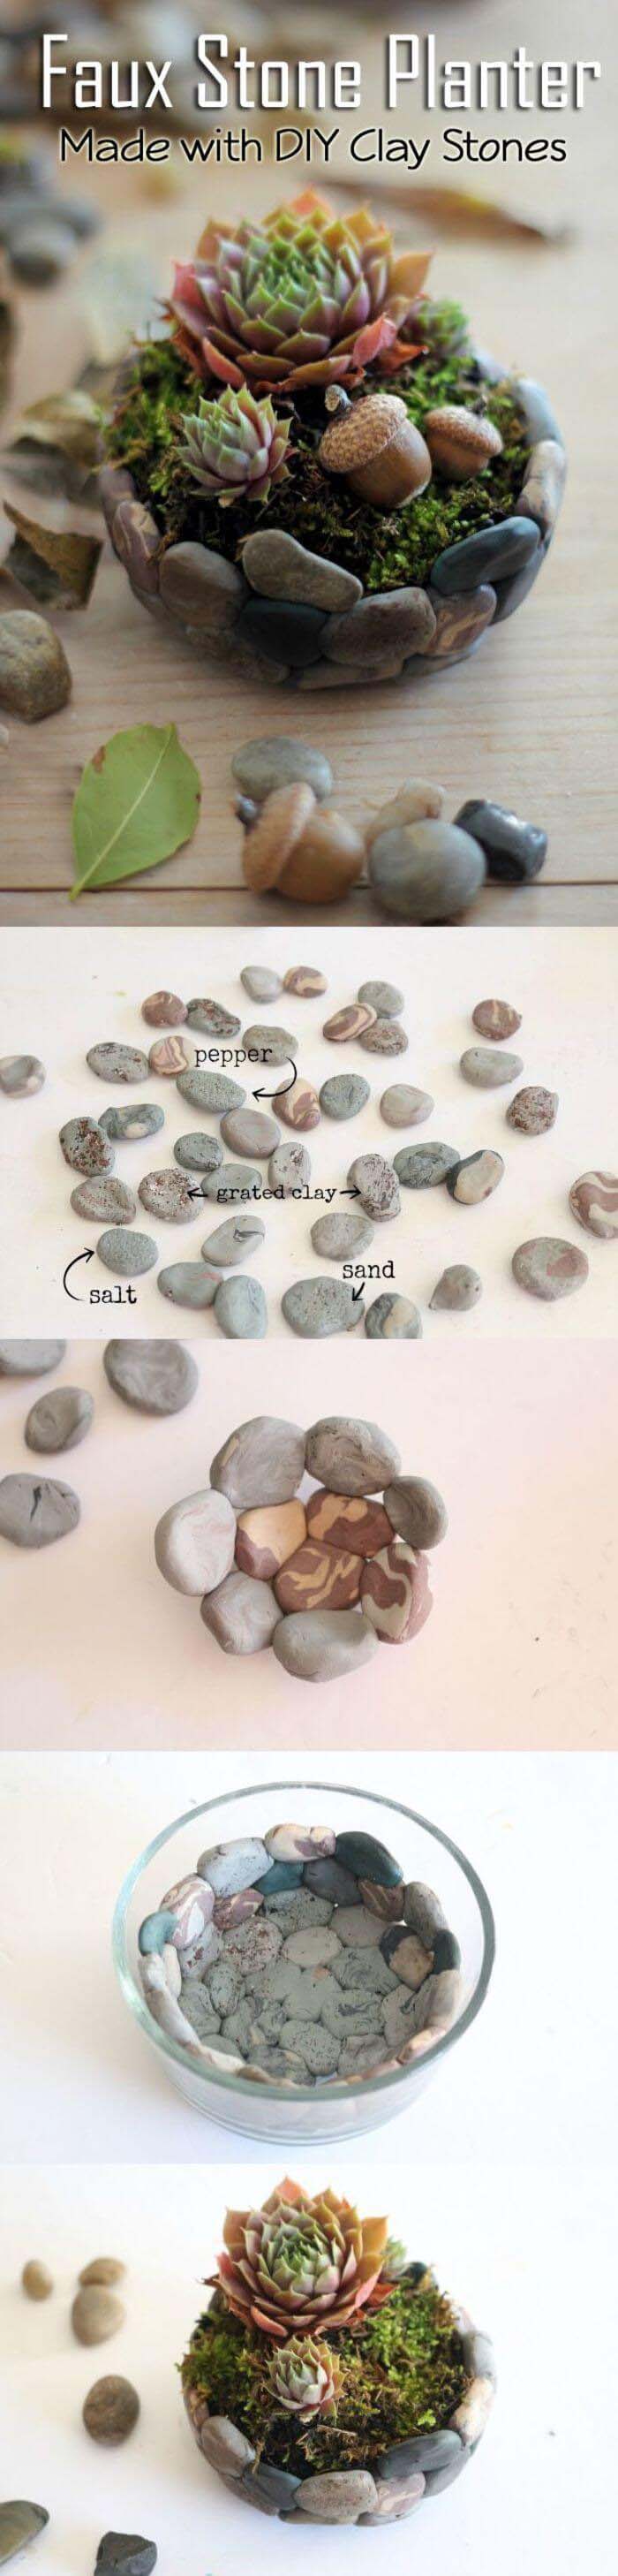 Pretty Stones Dress Up This Crafty Faux Planter #homedecor #pebbles #rocks #decorhomeideas